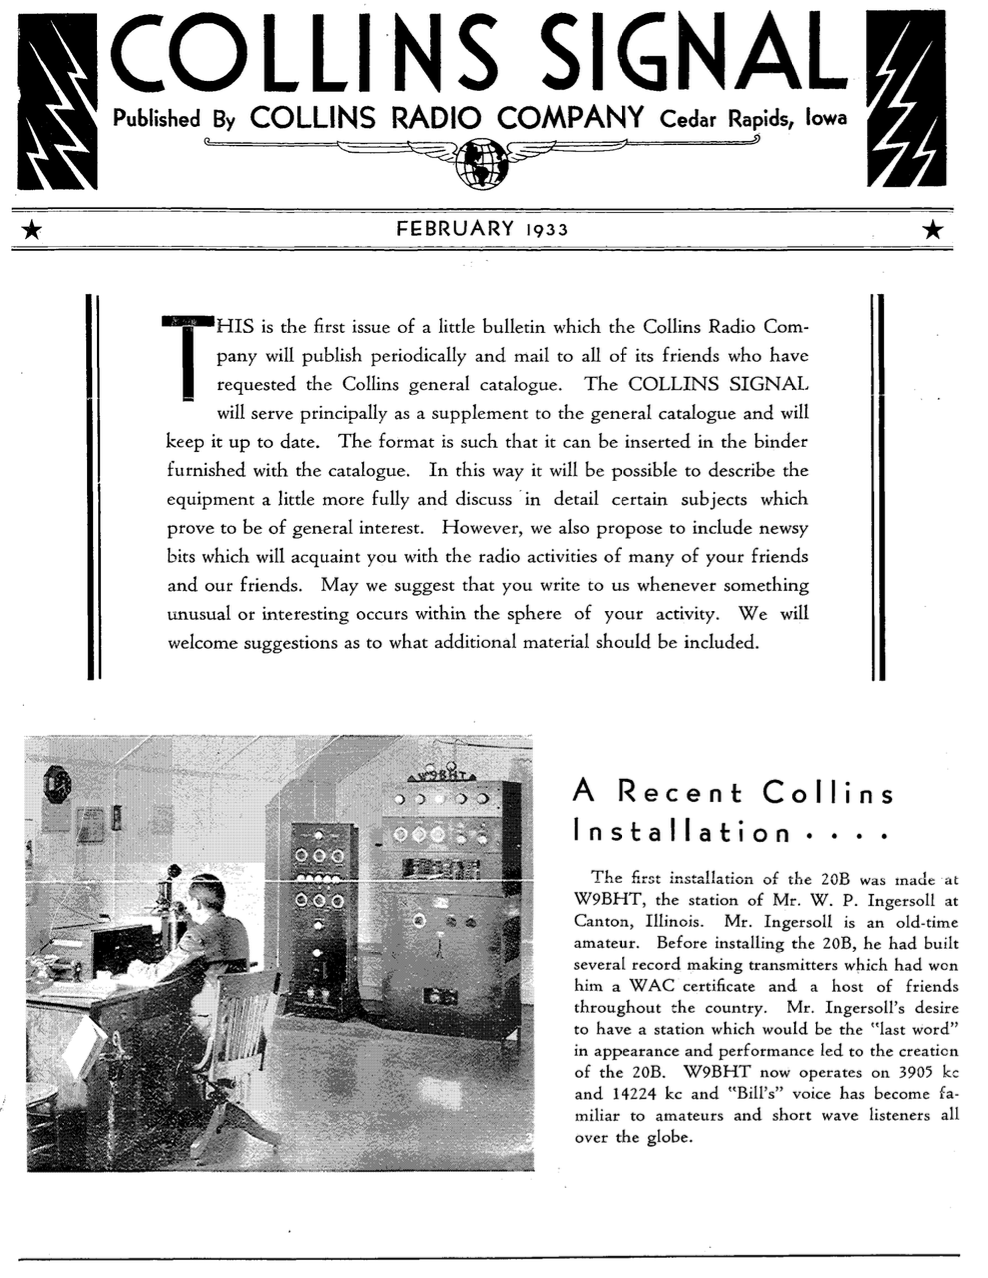 Collins - Signal Newsletter (1933-02)